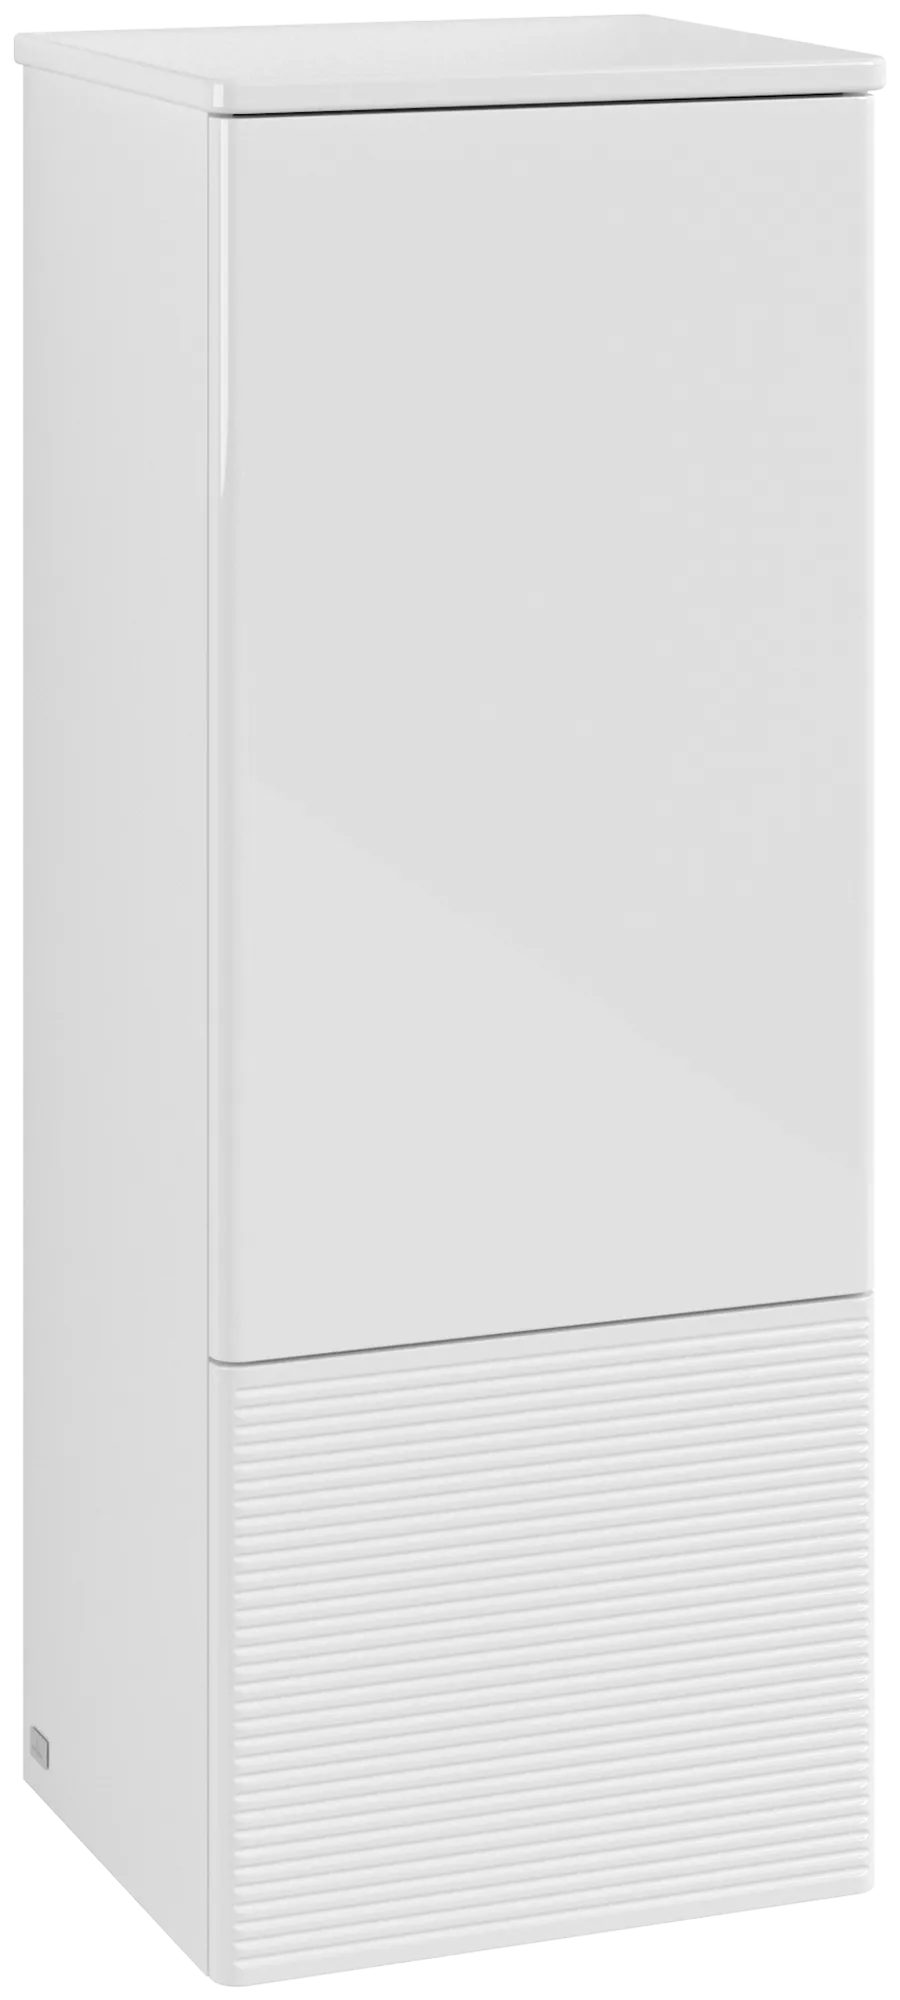 Obrázek VILLEROY BOCH Antao Medium-height cabinet, 1 door, 414 x 1039 x 356 mm, Front with grain texture, Glossy White Lacquer / Glossy White Lacquer #L43100GF